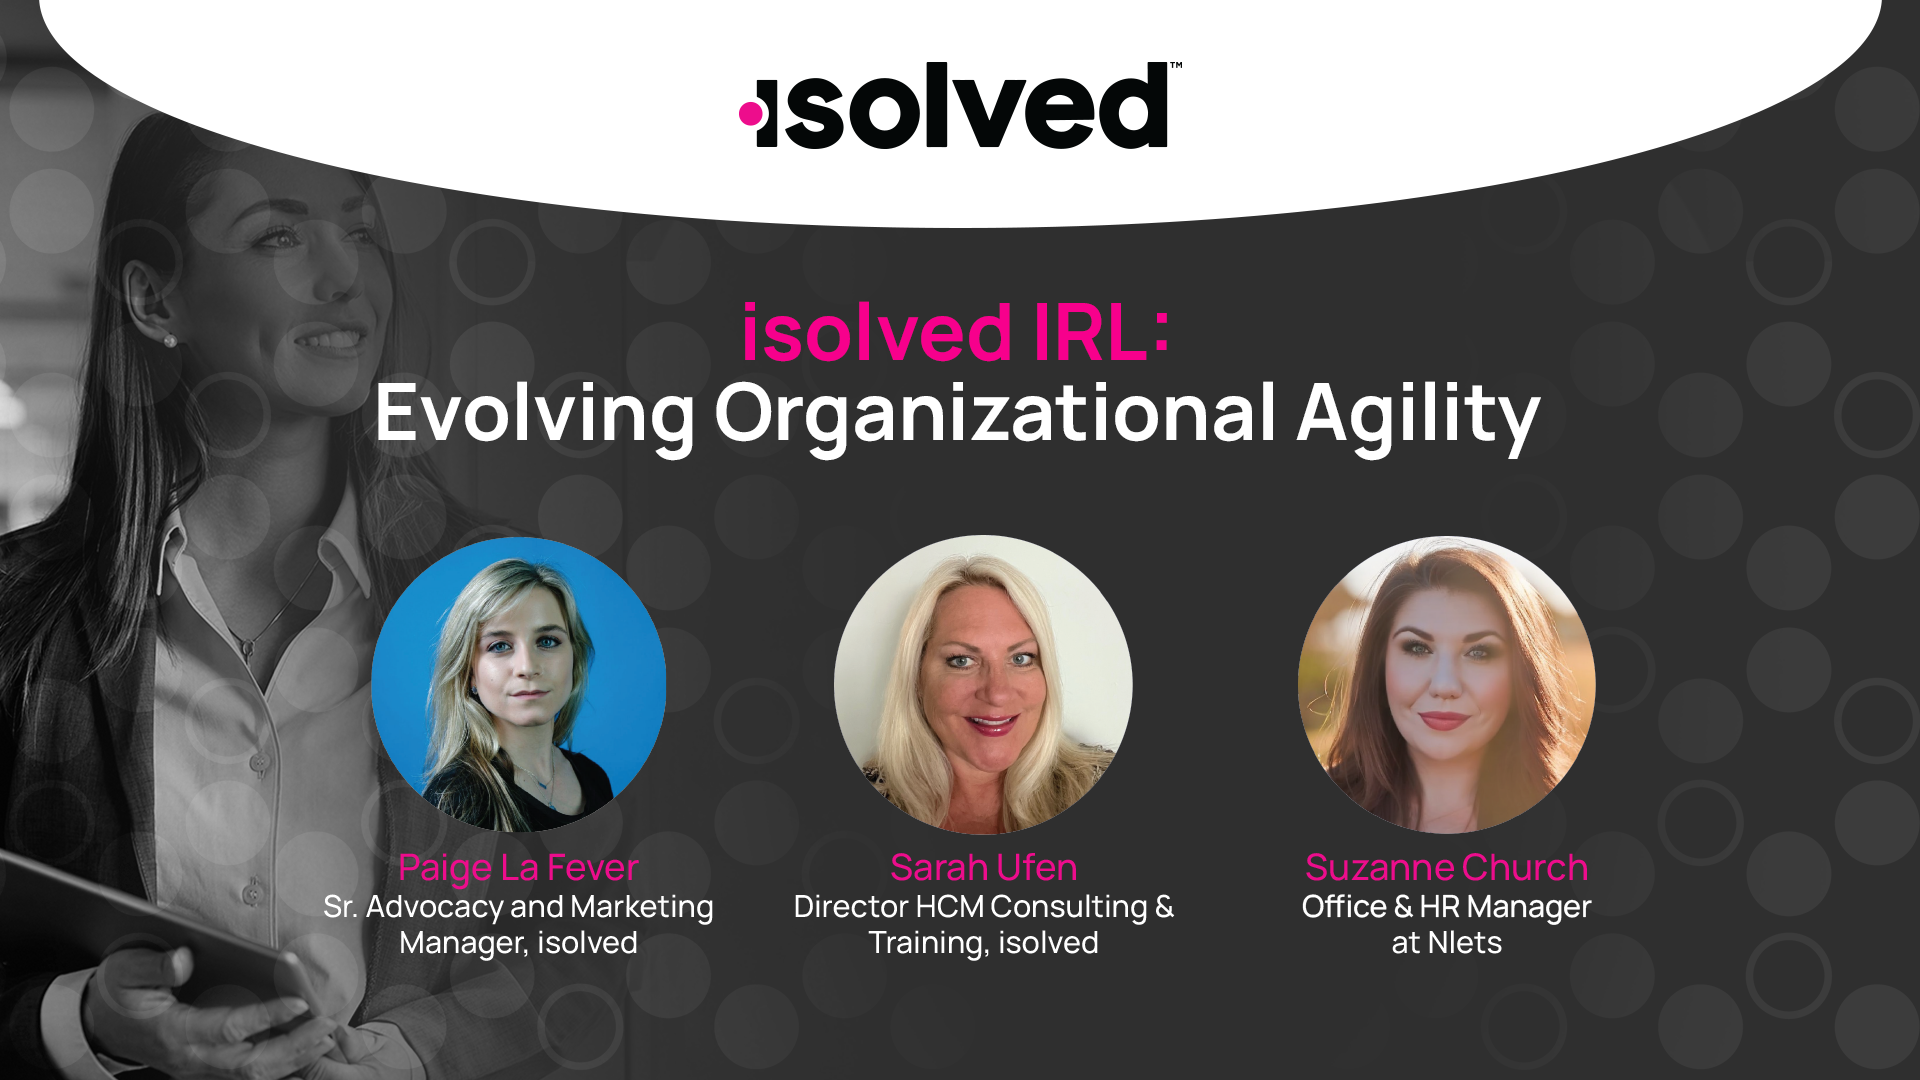 isolved IRL: Evolving Organizational Agility